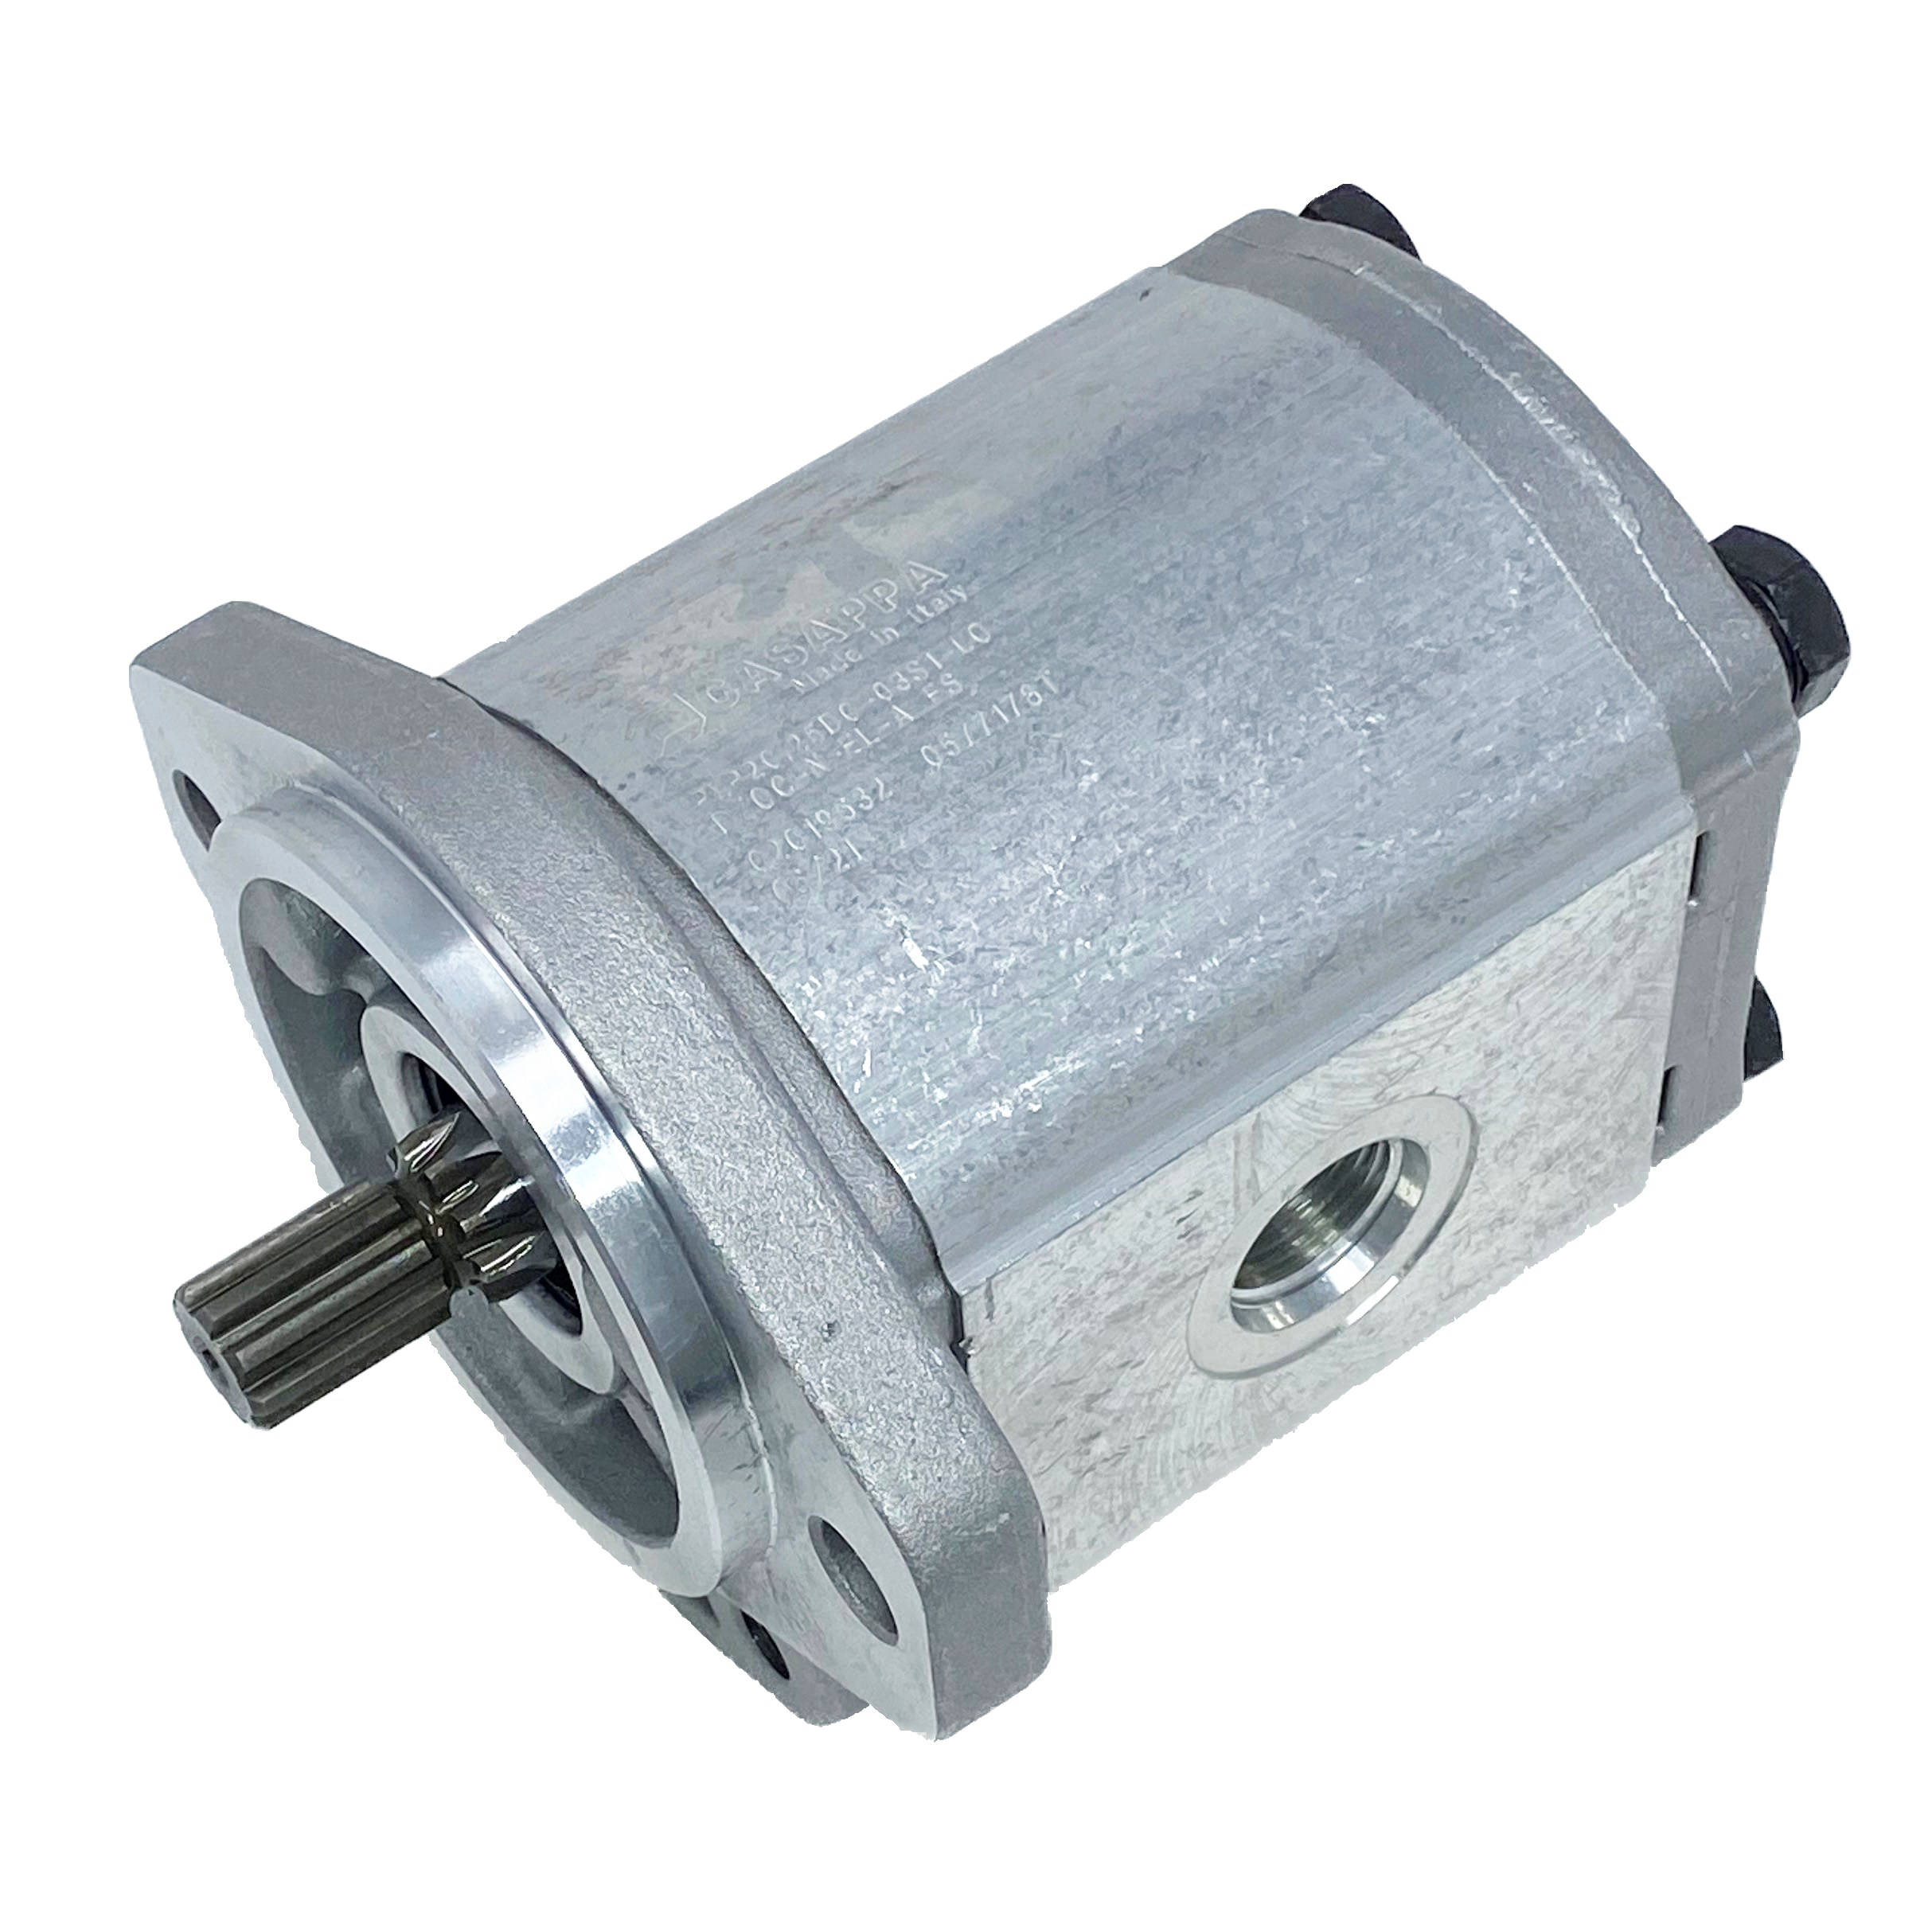 PLM20.31,5R0-03S1-LOC/OD-N-EL : Casappa Polaris Gear Motor, 33.03cc, 1885psi Rated, 2465RPM, Reversible Rear External Drain, 9T 16/32dp Shaft, SAE A 2-Bolt Flange, 0.625 (5/8") #10 SAE Inlet, 0.75 (3/4") #12 SAE Outlet, Aluminum Body & Flange